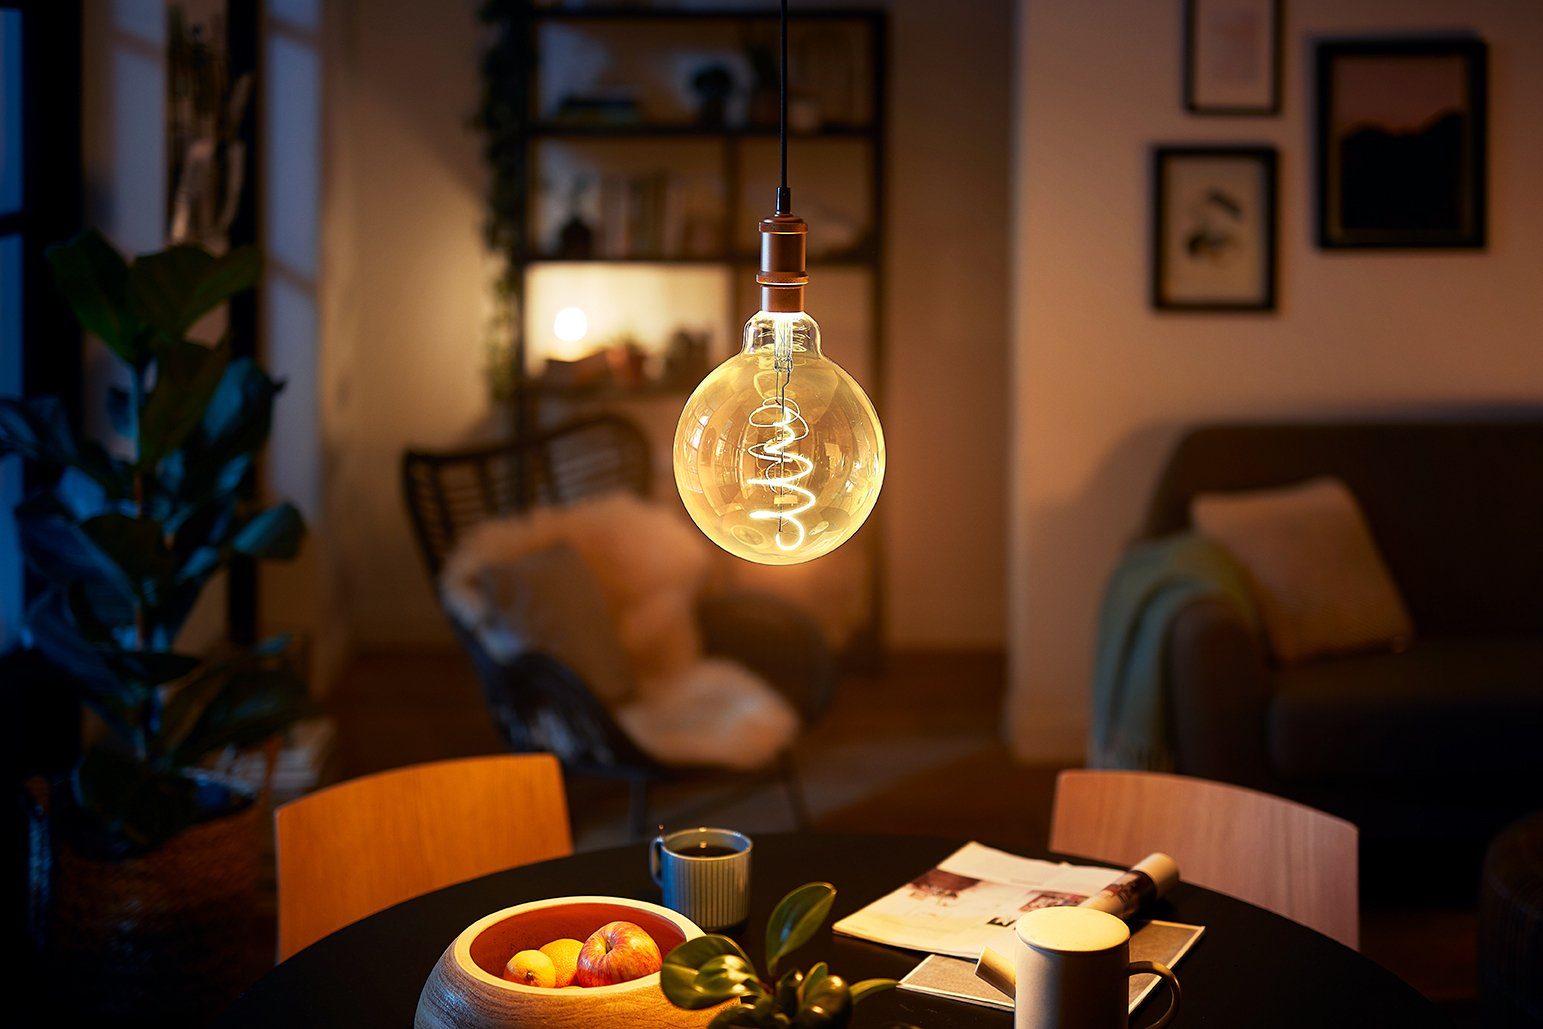 LED E27 XL-Globe St., E27, 1er 40W 1 Philips LED-Leuchtmittel Warmweiß, dimmbar Vintage, Lampe gold